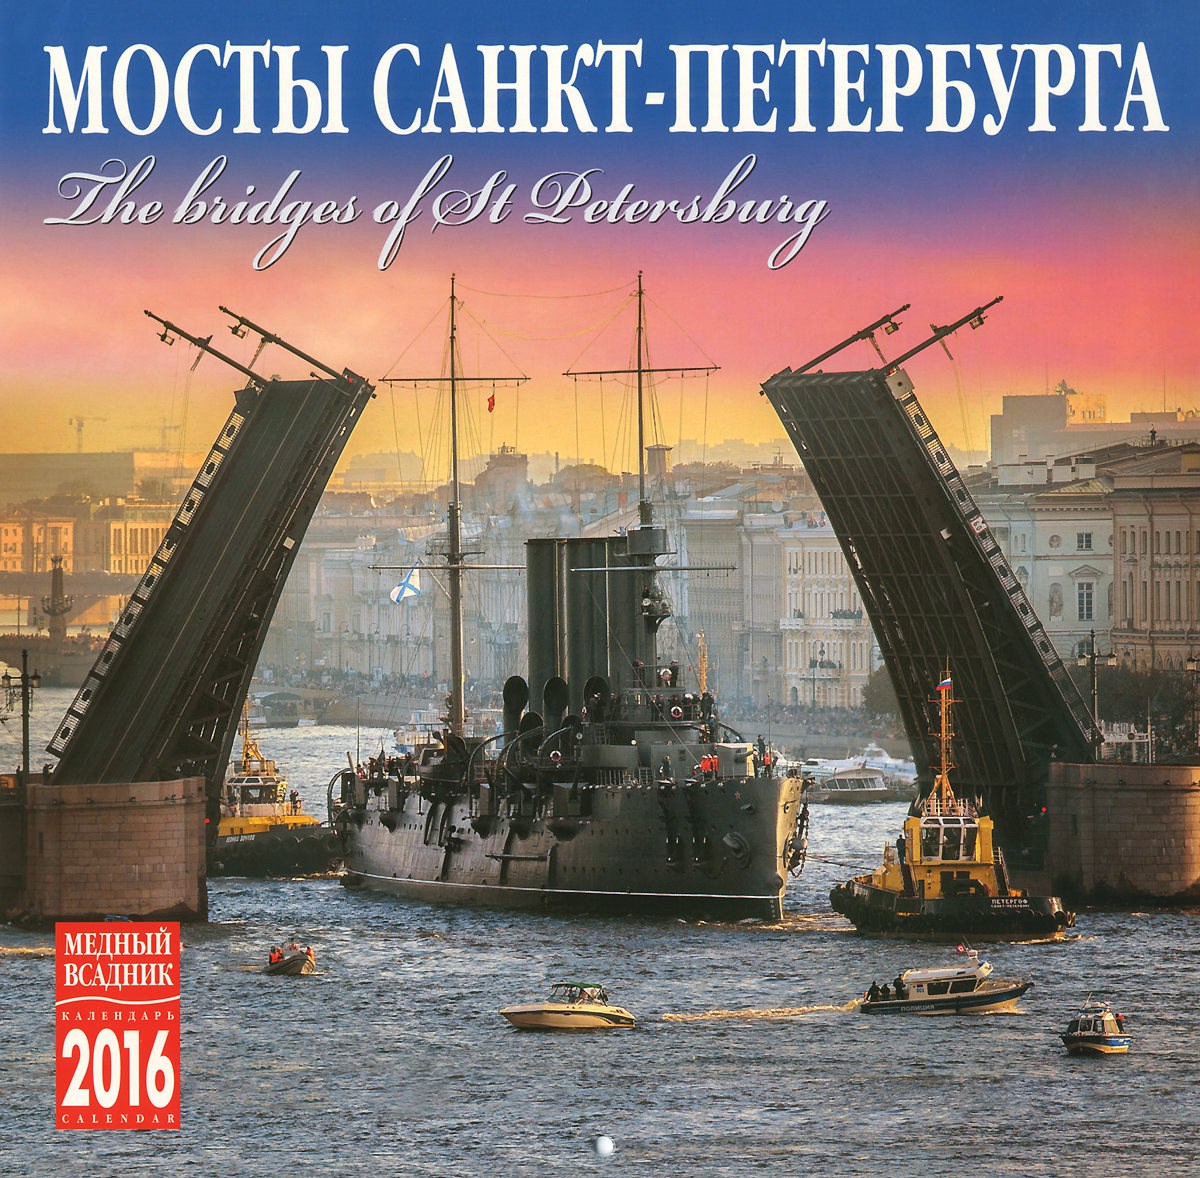 Календарь 2016 (на скрепке). Мосты Санкт-Петербурга / The Bridges of St. Petersburg